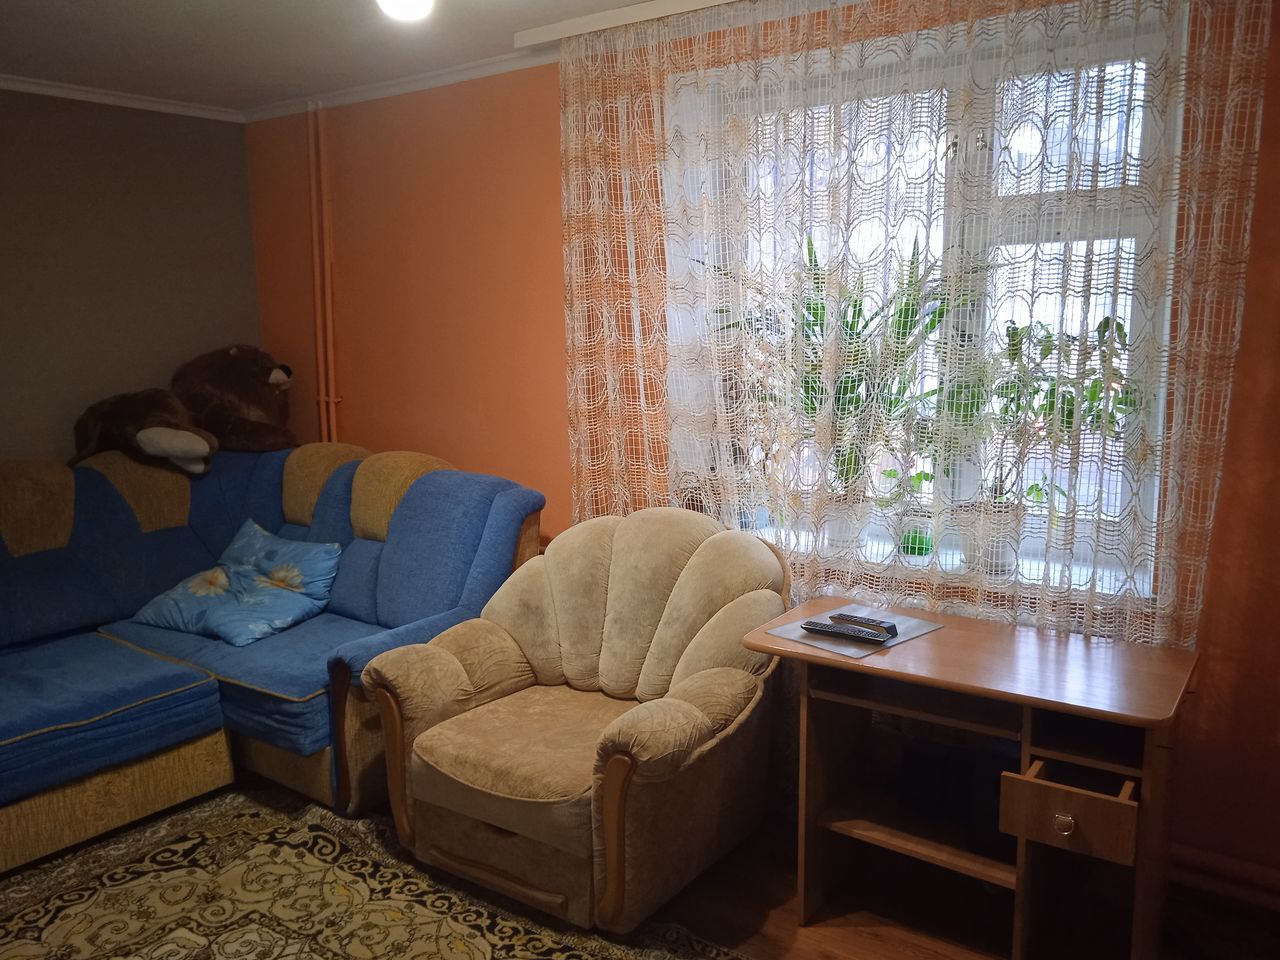 VÂNDUT, Apartament de vânzare, Chișinău, sec.Rîșcani, 1 Odaie, Lângă parc, 29 m2, et.1